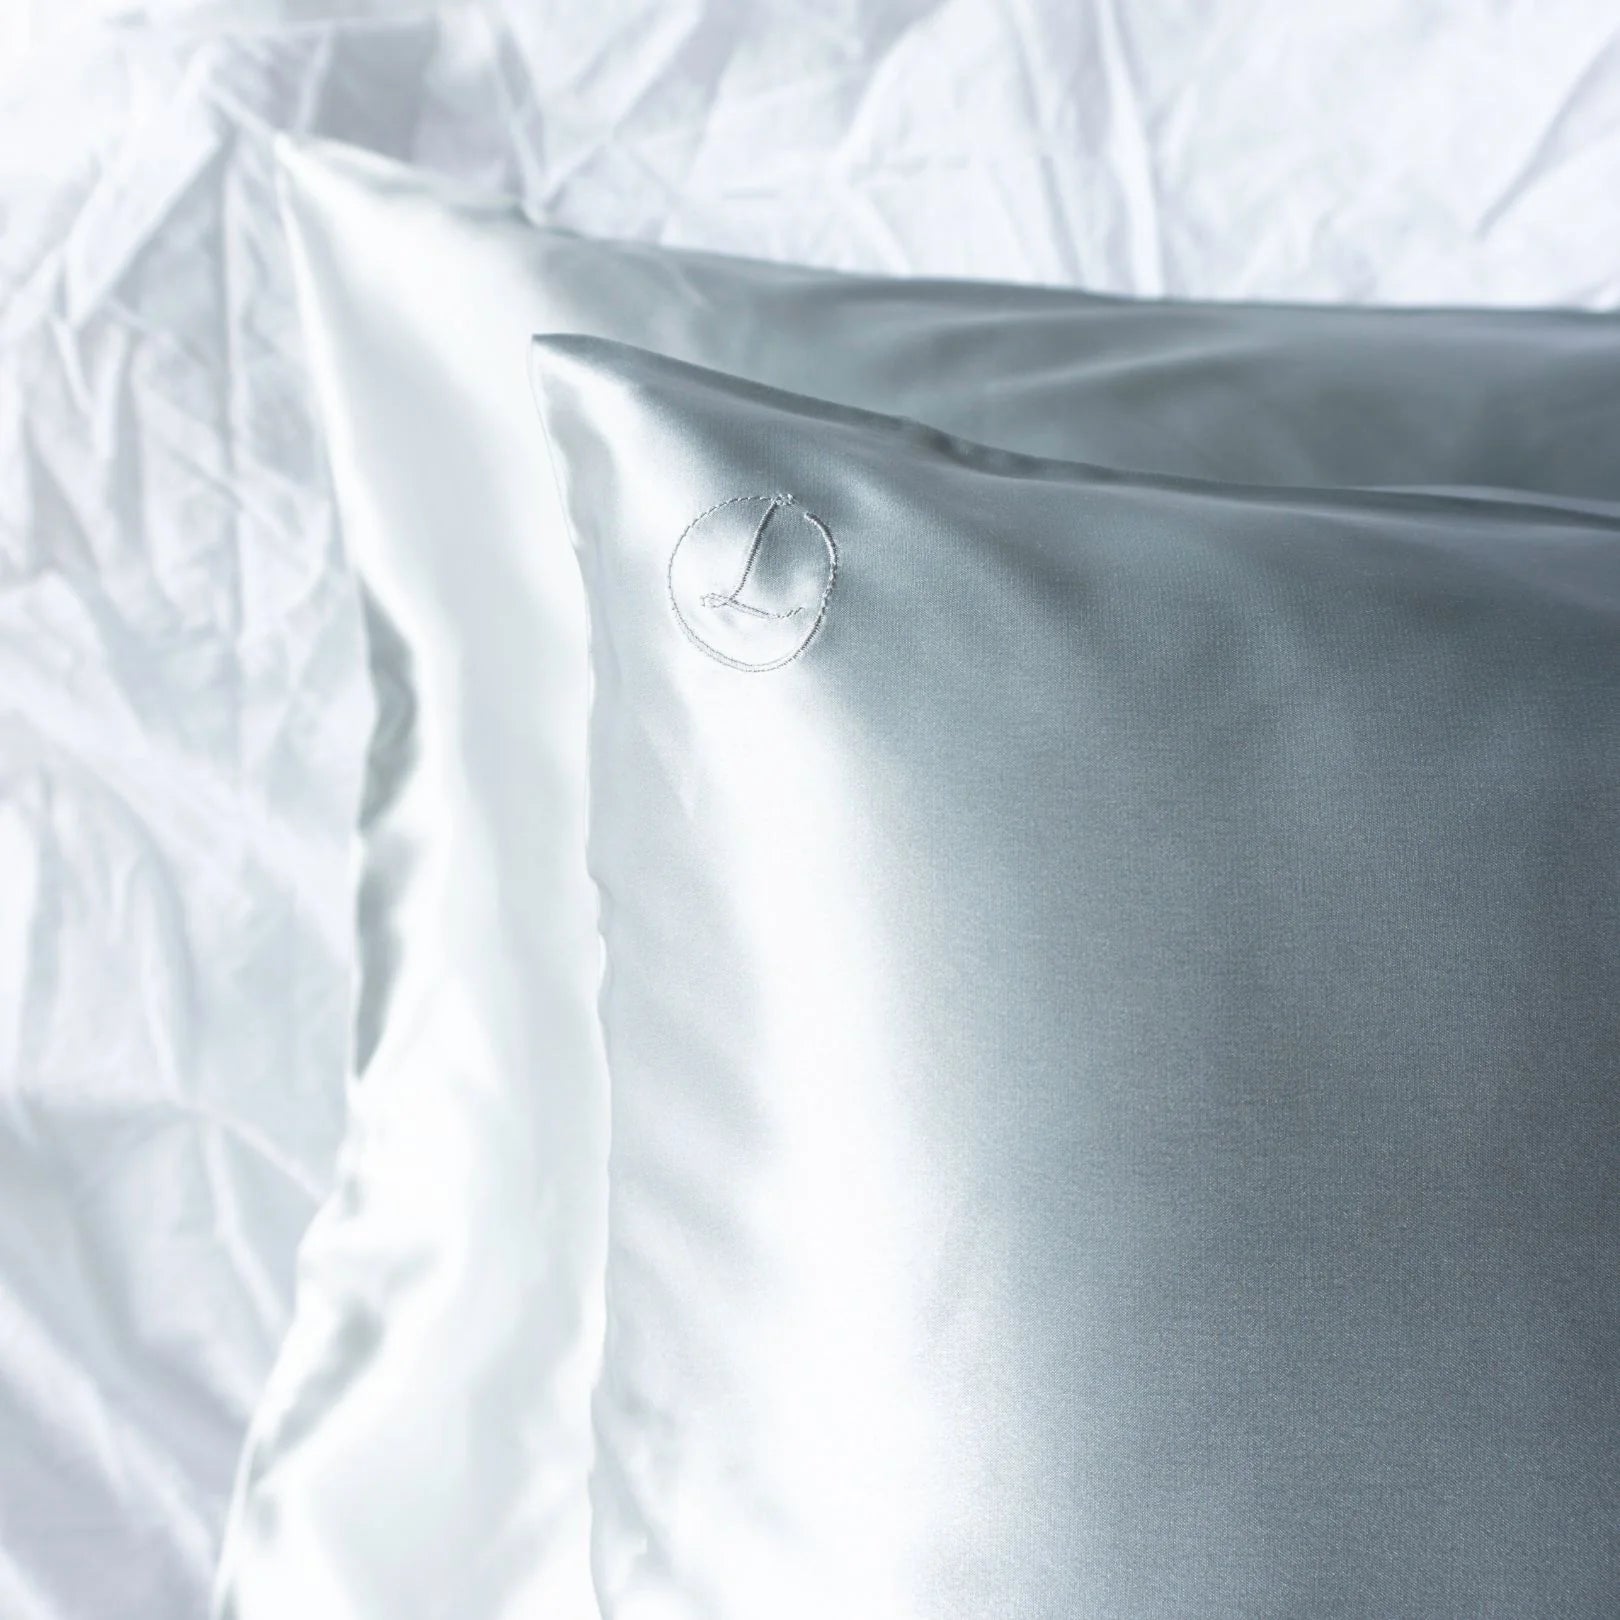 Mulberry Silk Pillowcase - Silver Grey